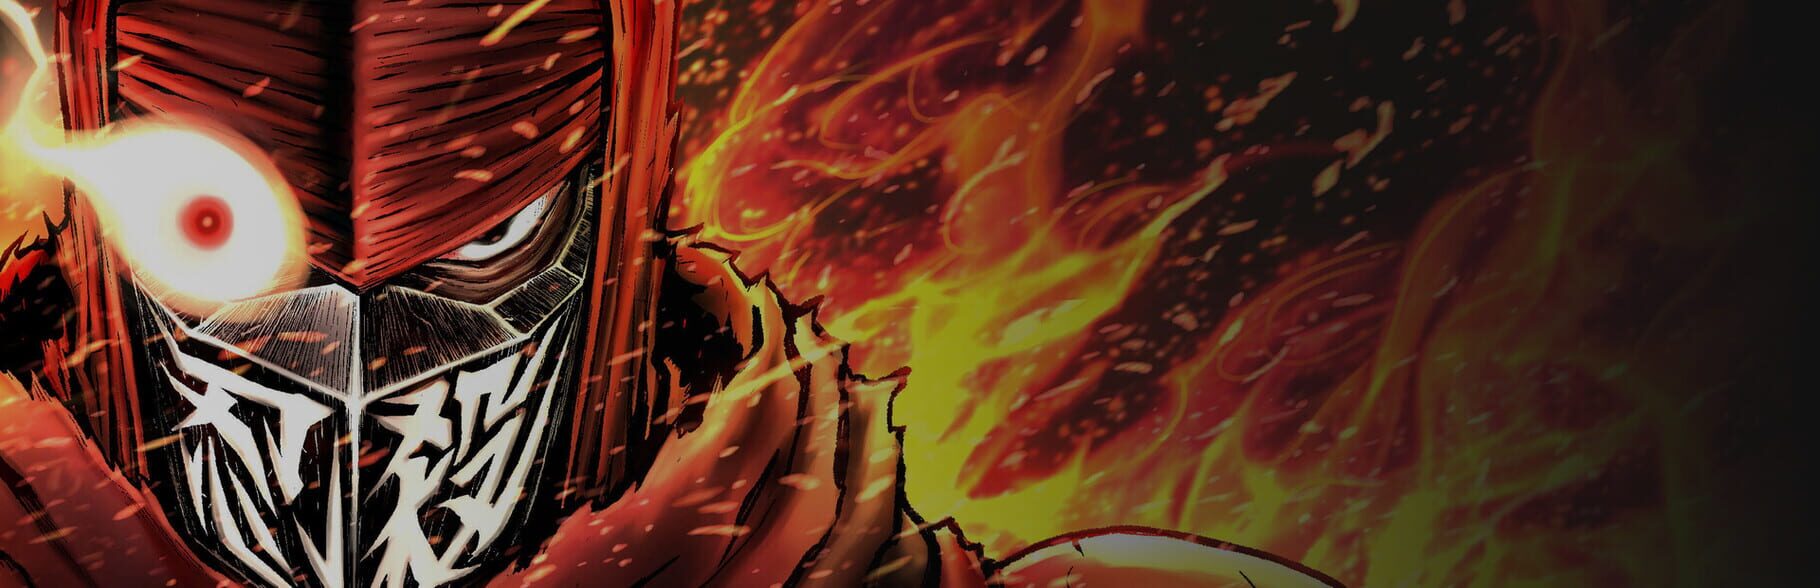 Artwork for Ninja Slayer: Neo-Saitama In Flames